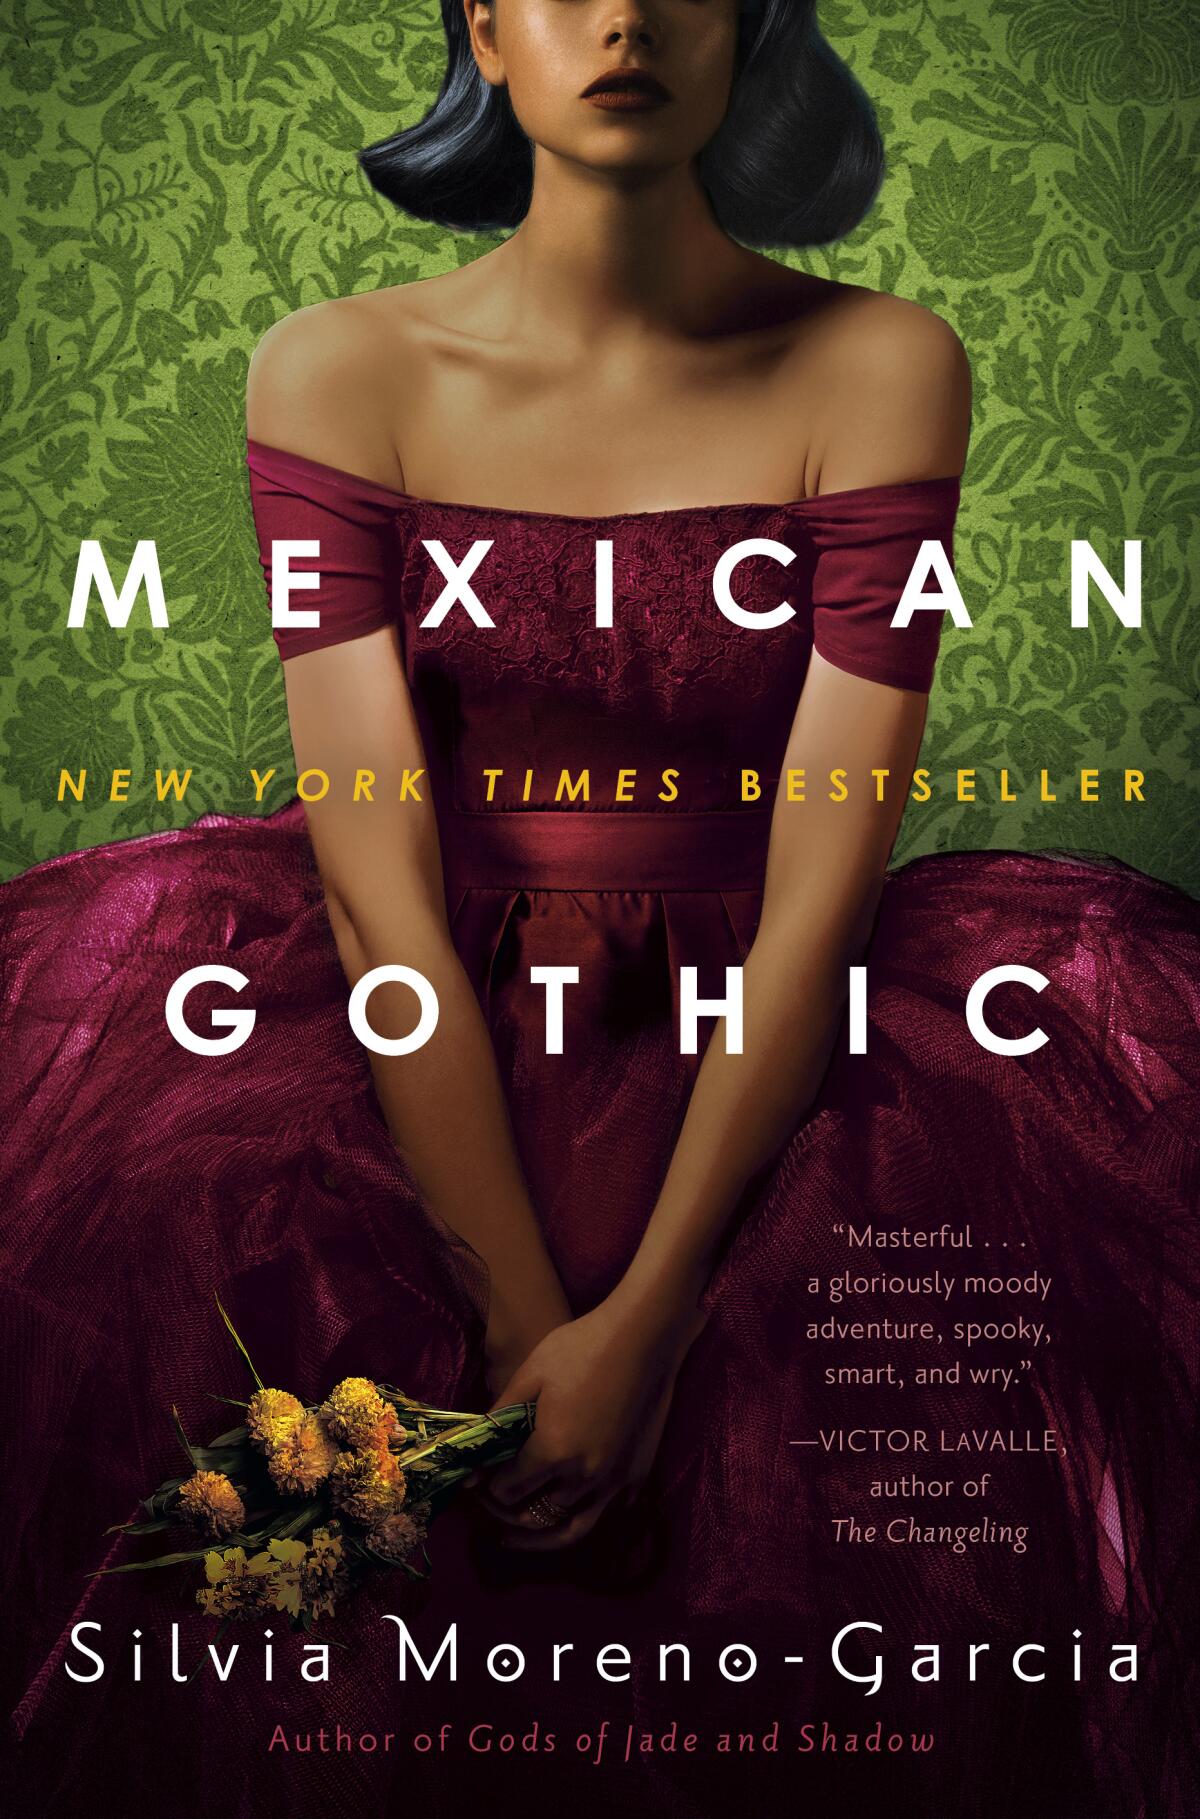 The book "Mexican Gothic" by Silvia Moreno-Garcia